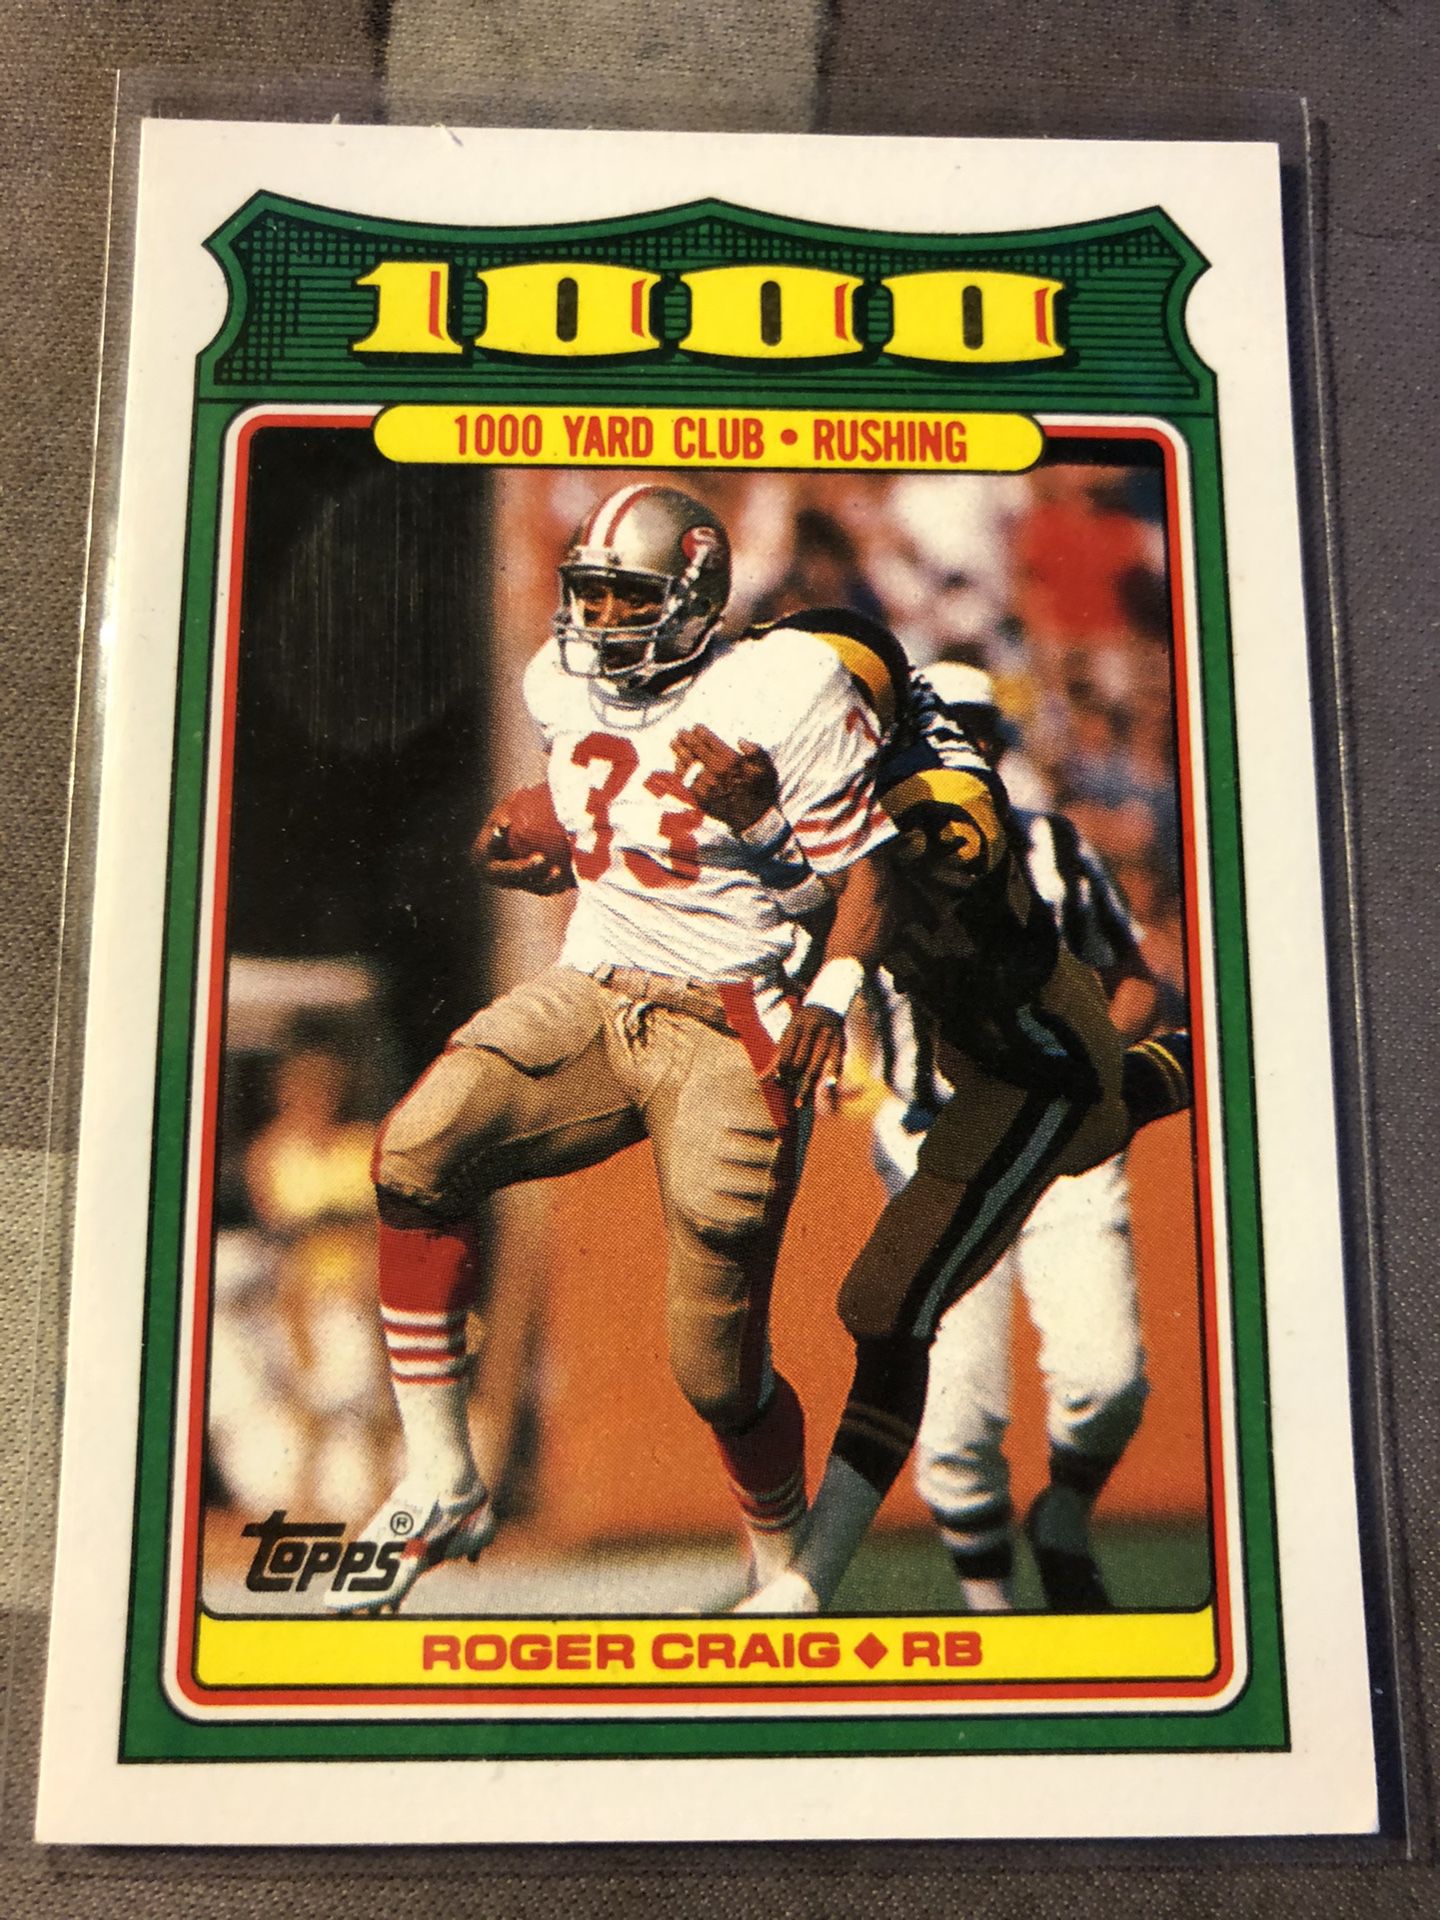 1988 Topps 1000 Yard Club San Francisco 49ers Football Card #19 Roger Craig